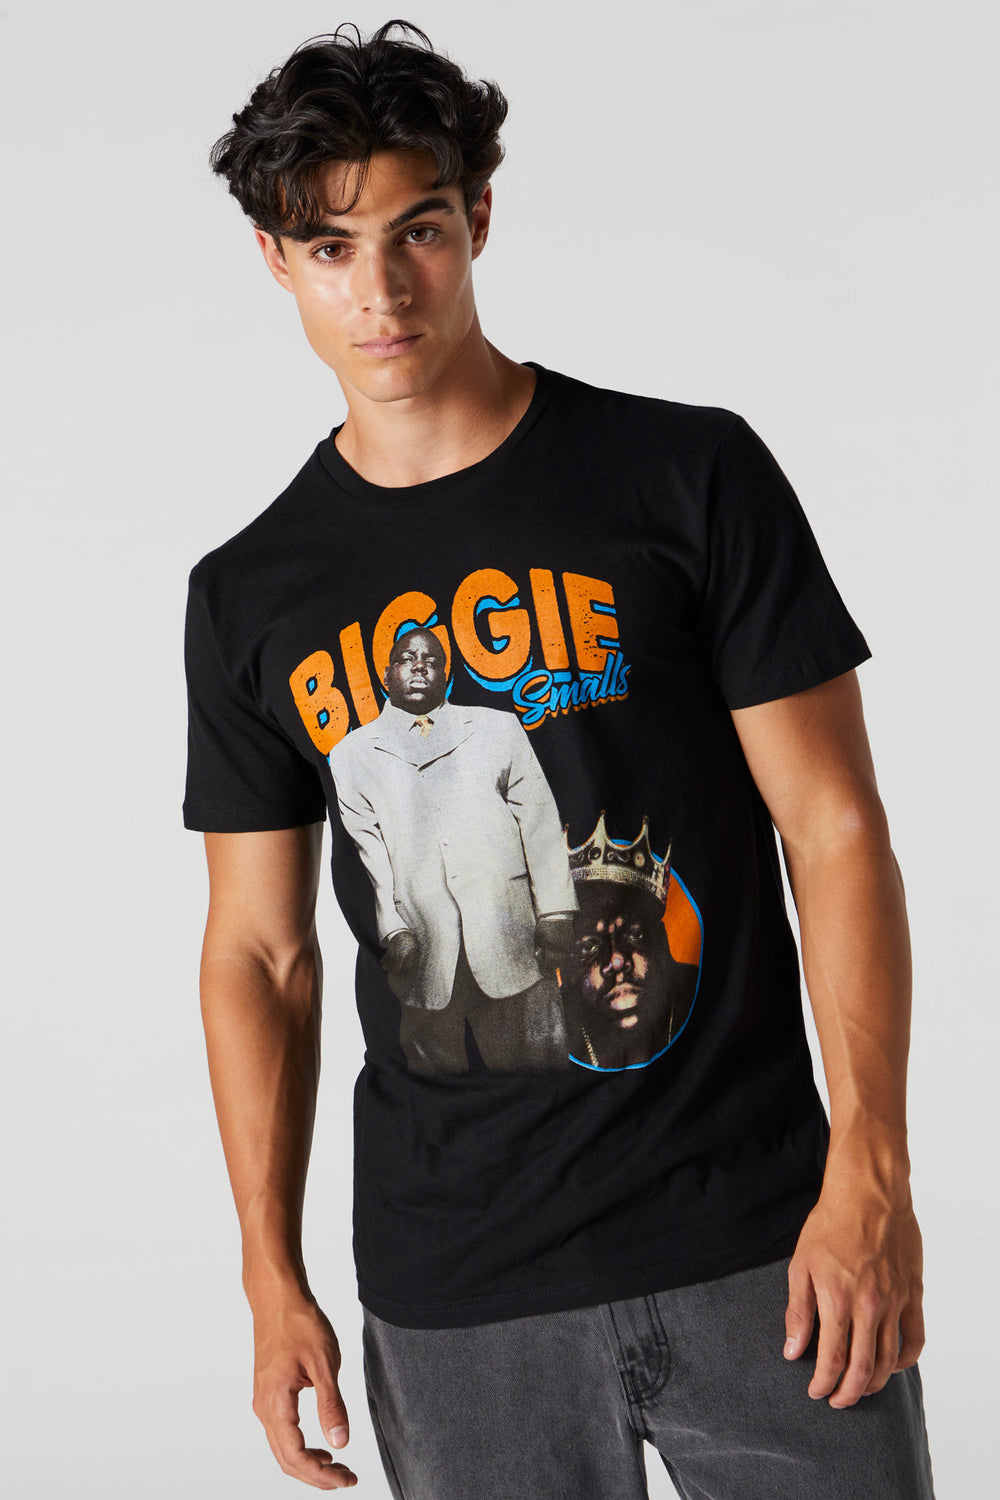 Biggie Smalls Graphic T-Shirt Biggie Smalls Graphic T-Shirt 1